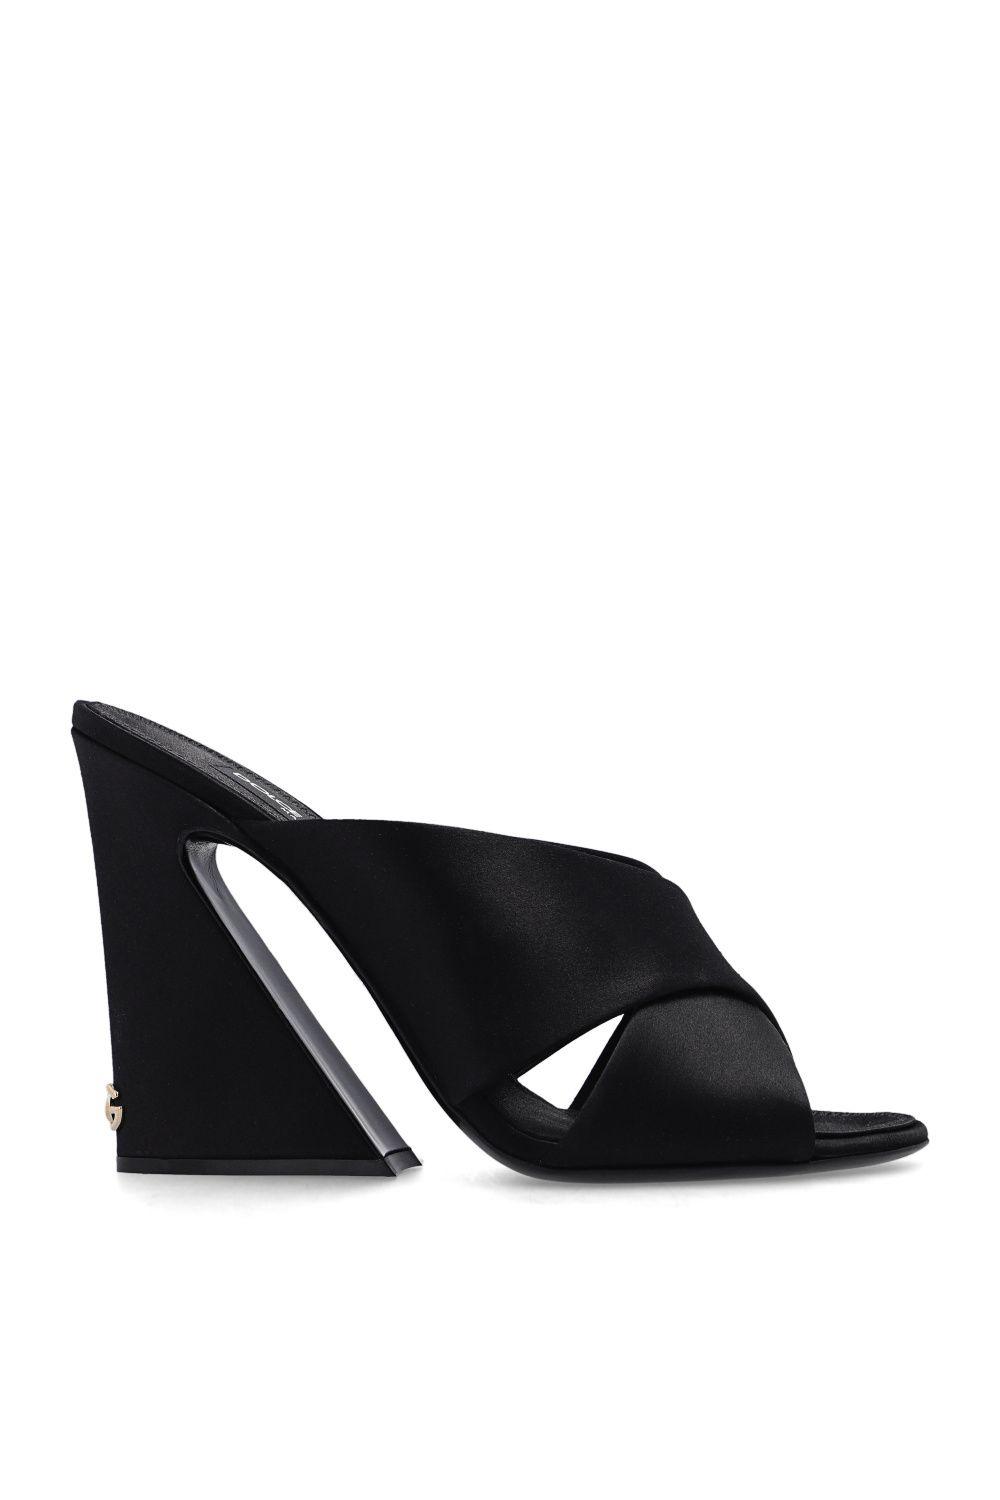 Dolce & Gabbana Satin Mules in Black | Lyst